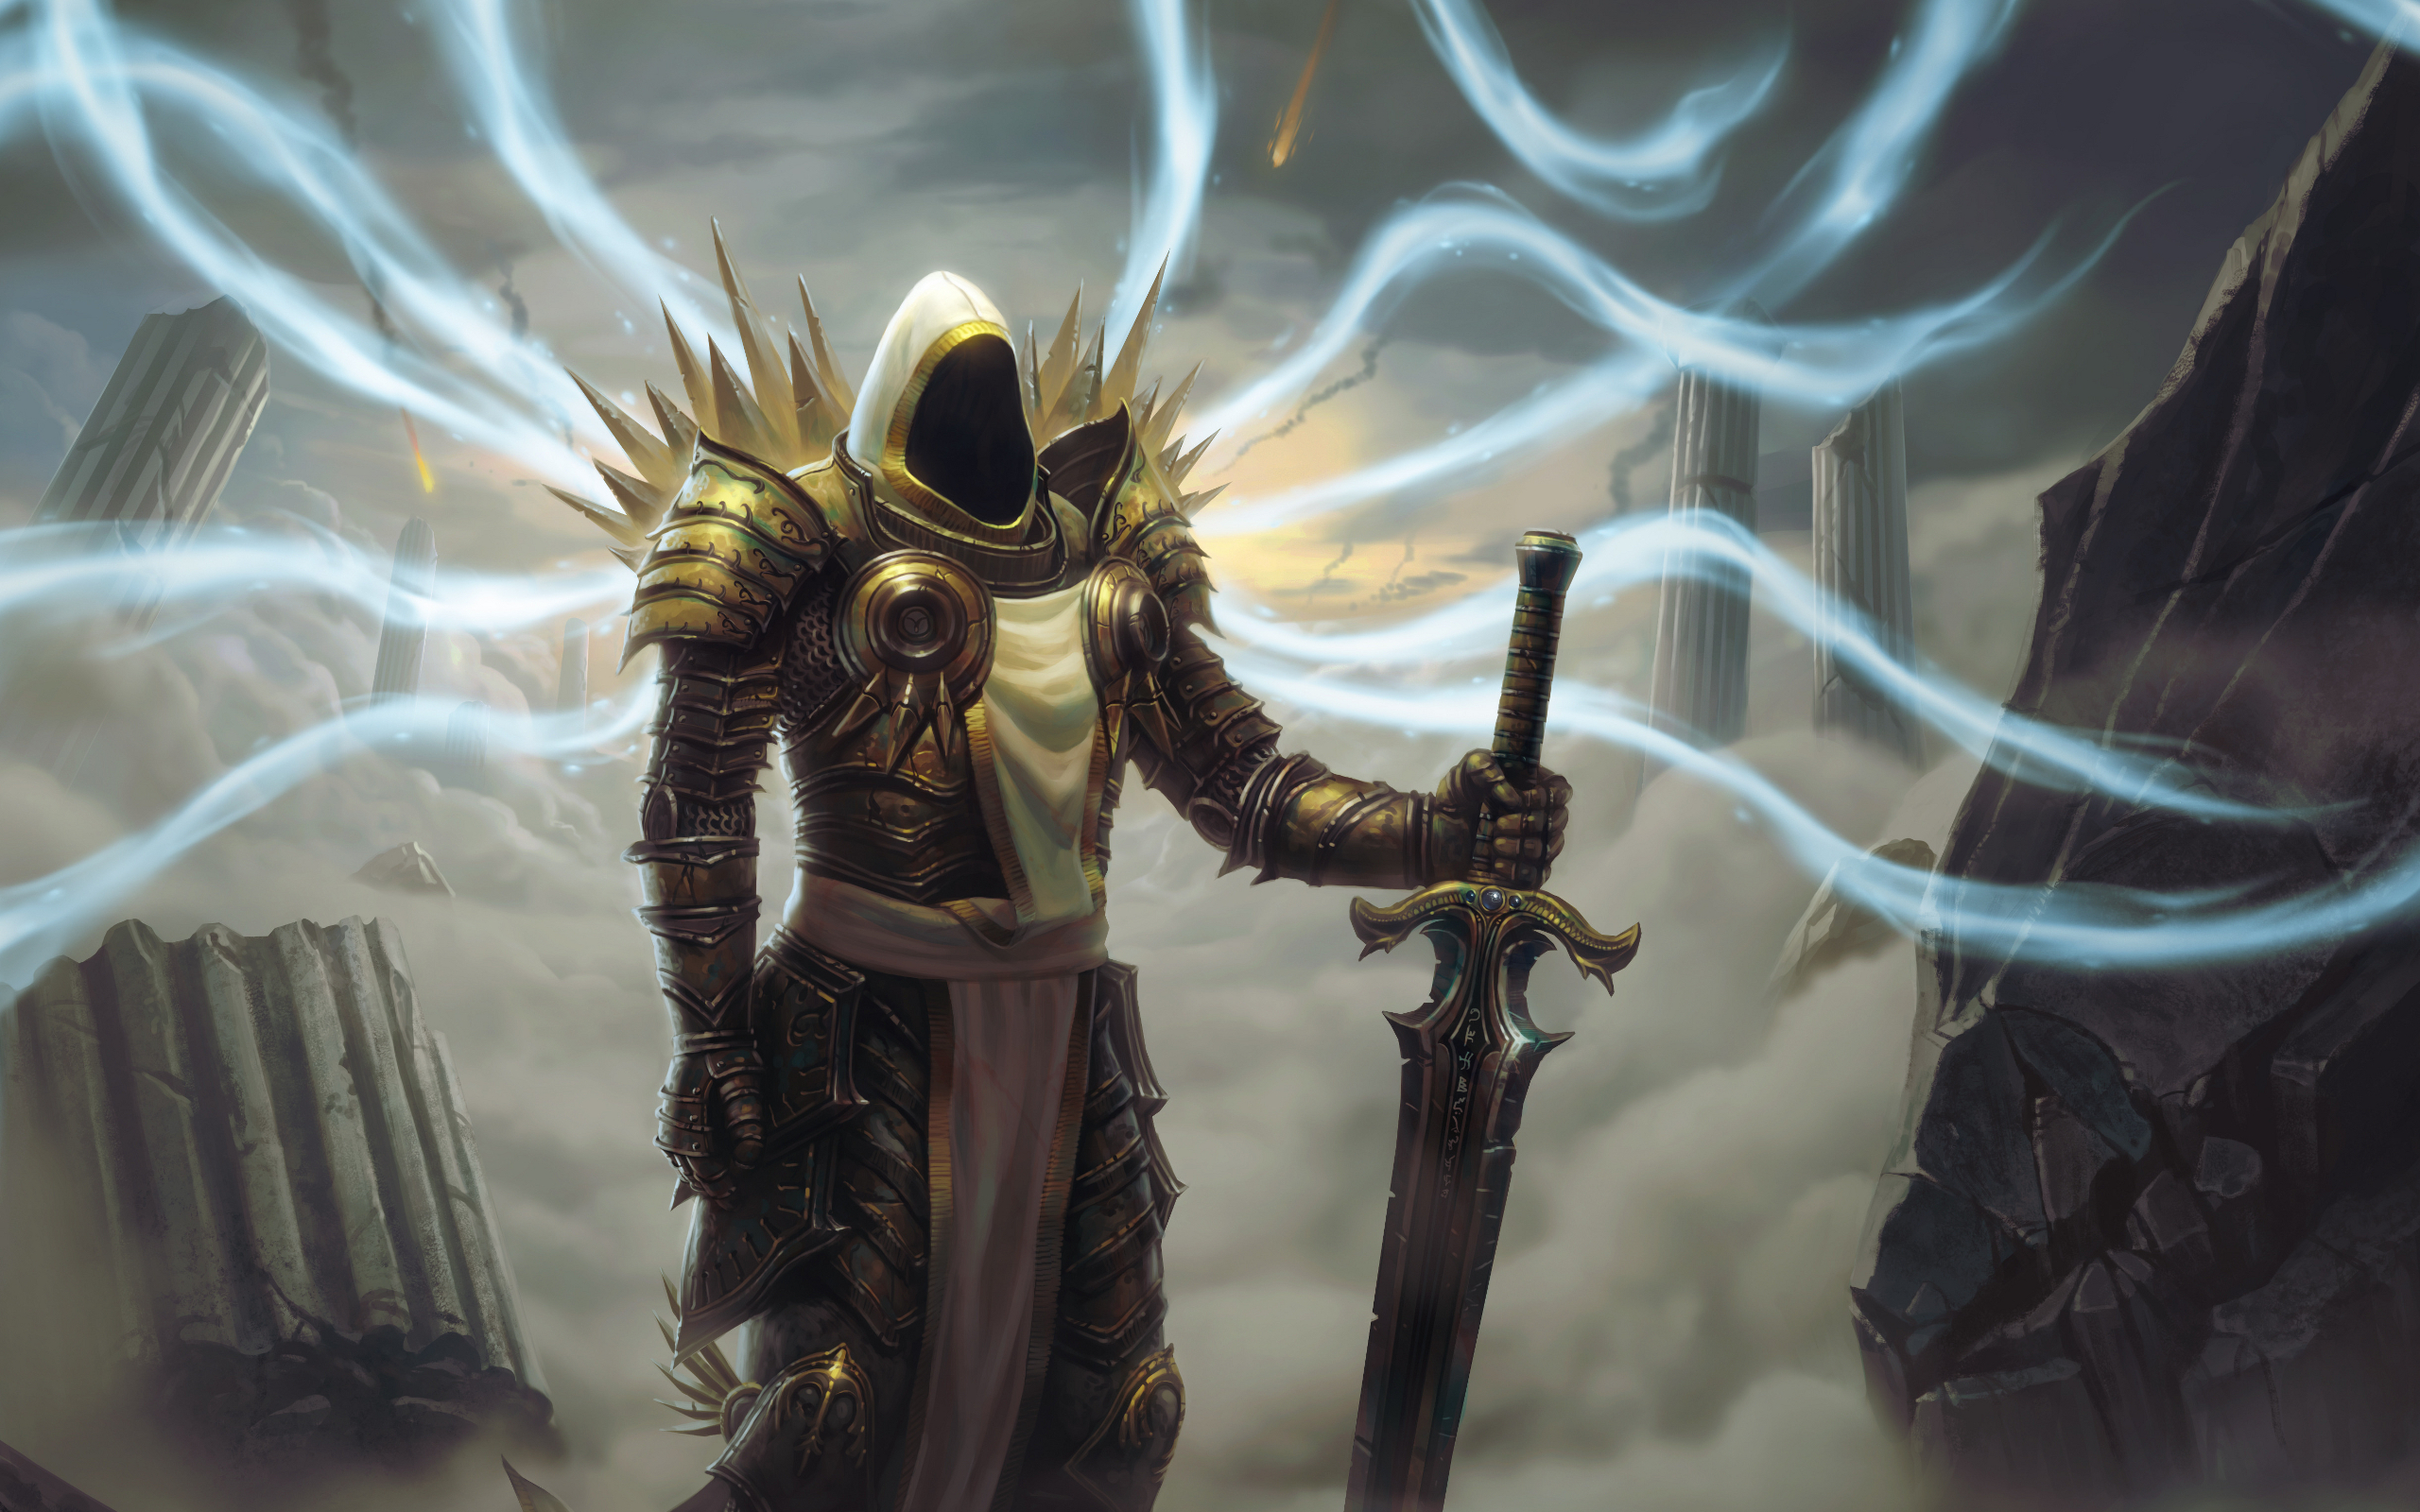 General 2560x1600 video games Diablo III Tyrael fantasy art digital art video game art PC gaming sword Blizzard Entertainment